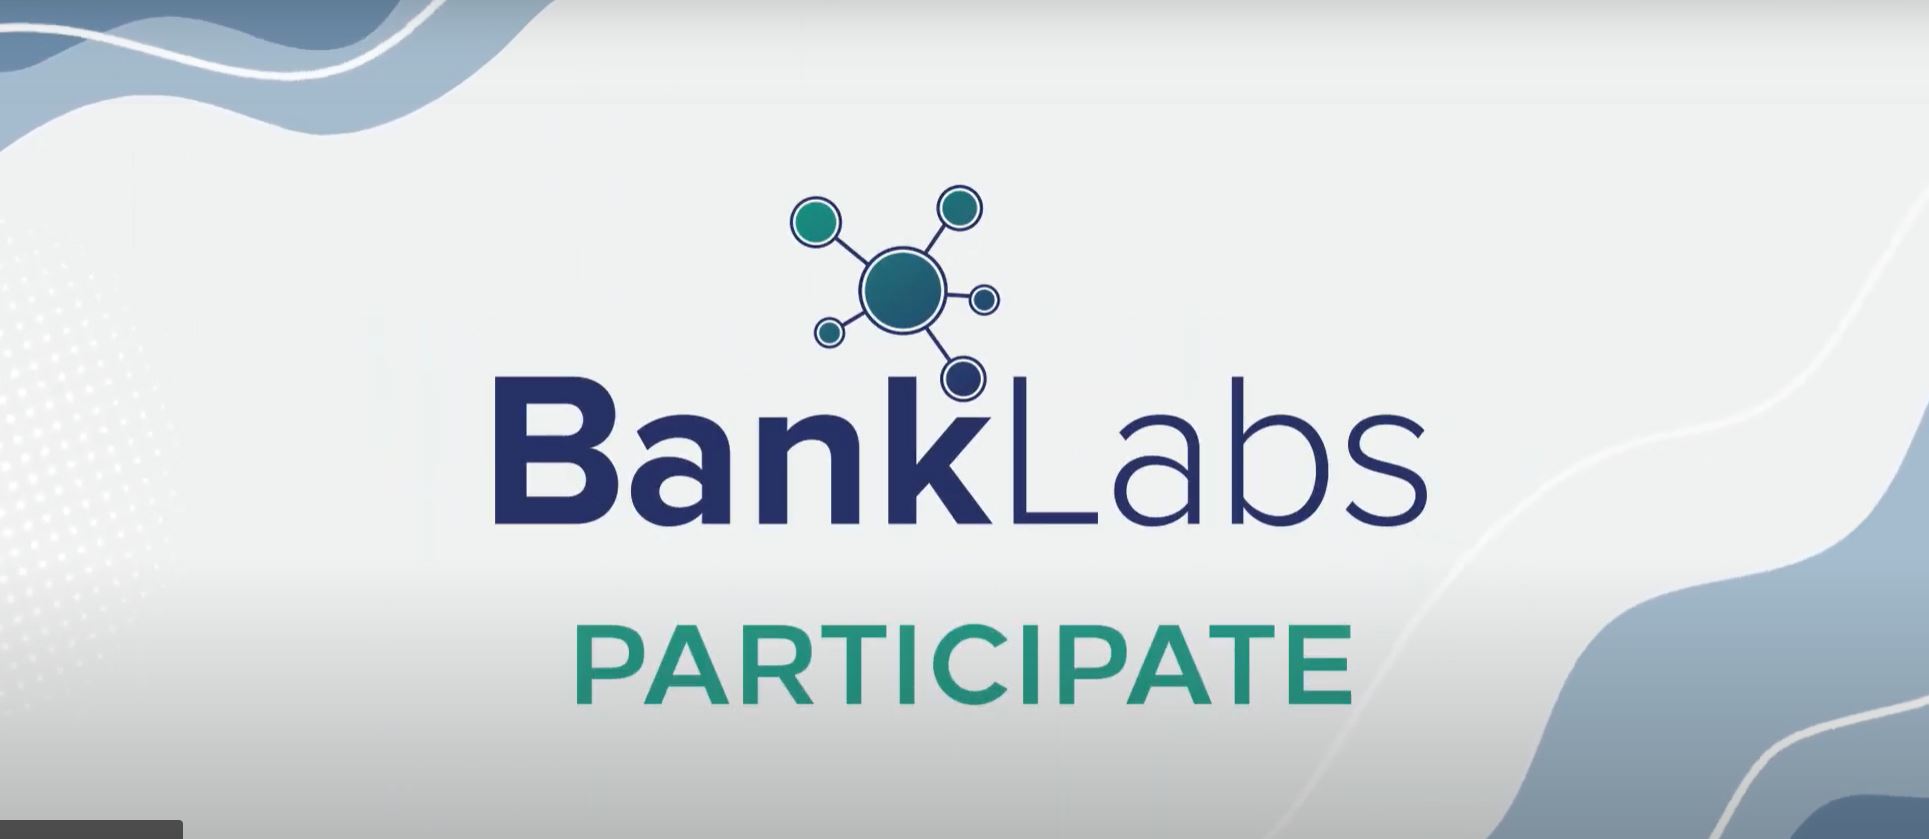 Participate: Loan Participation Automation Tool